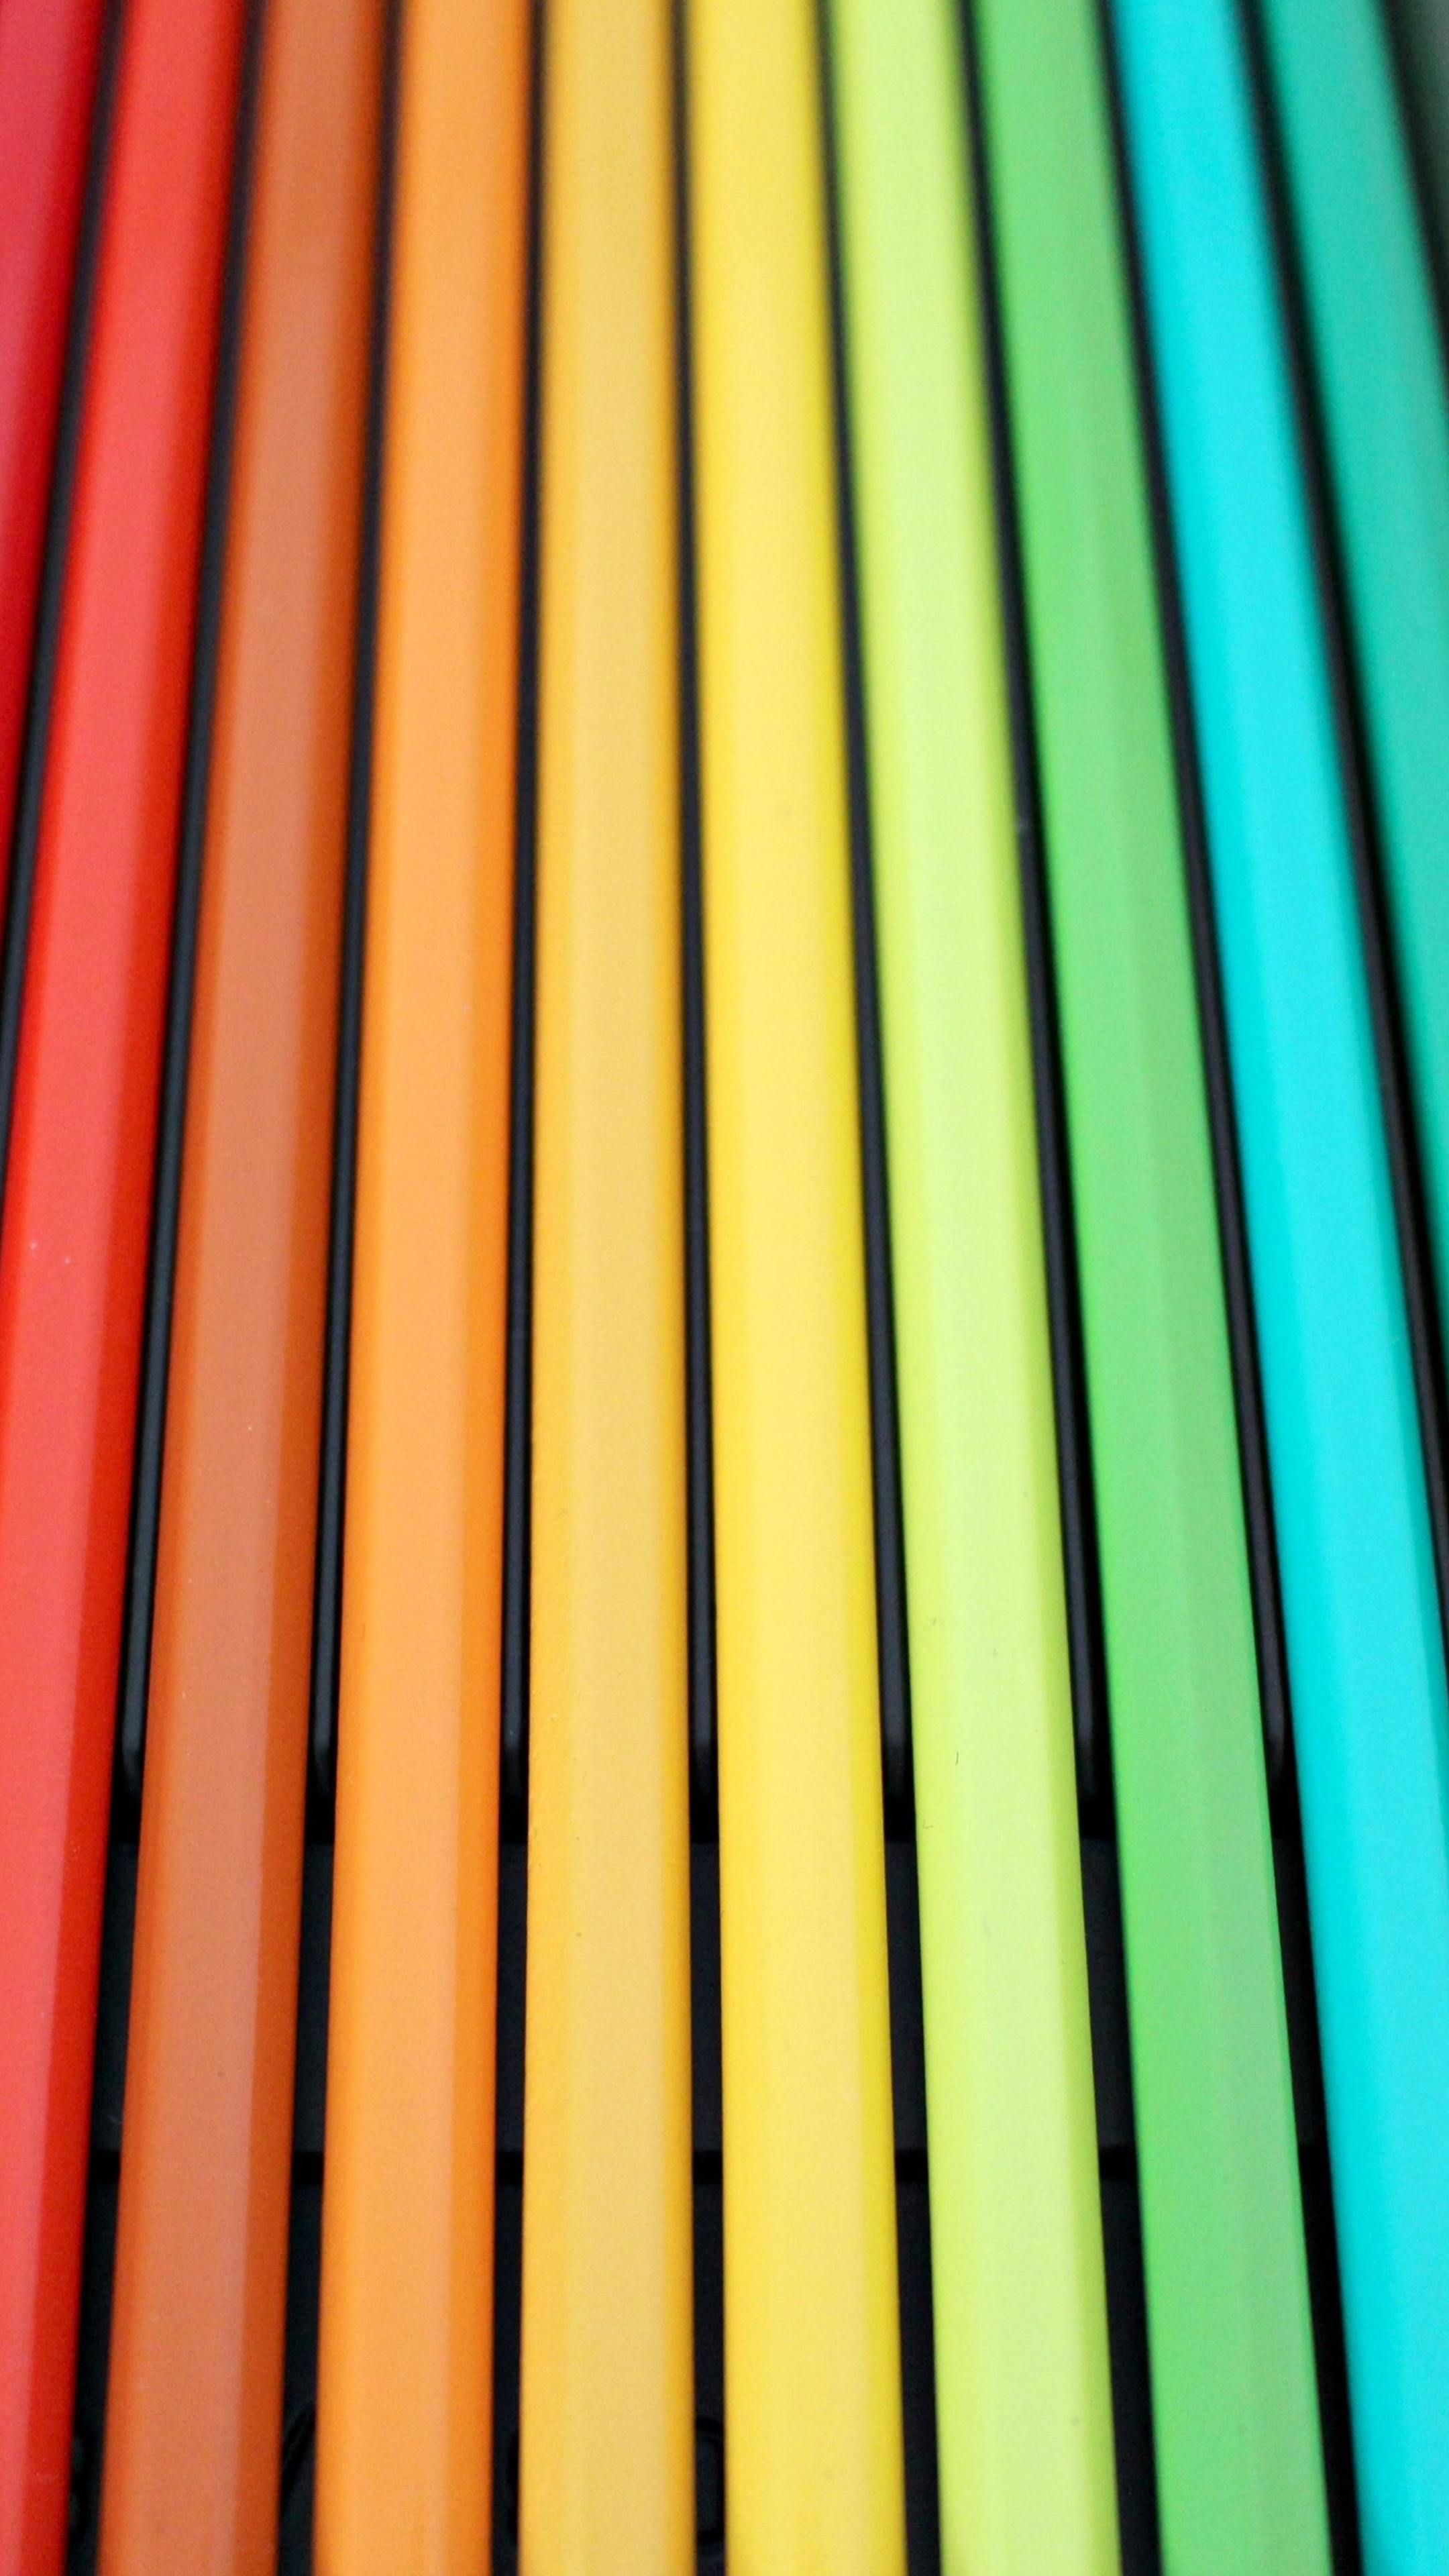 Colorful Crayons Pencils Background 5k Sony Xperia X, XZ, Z5